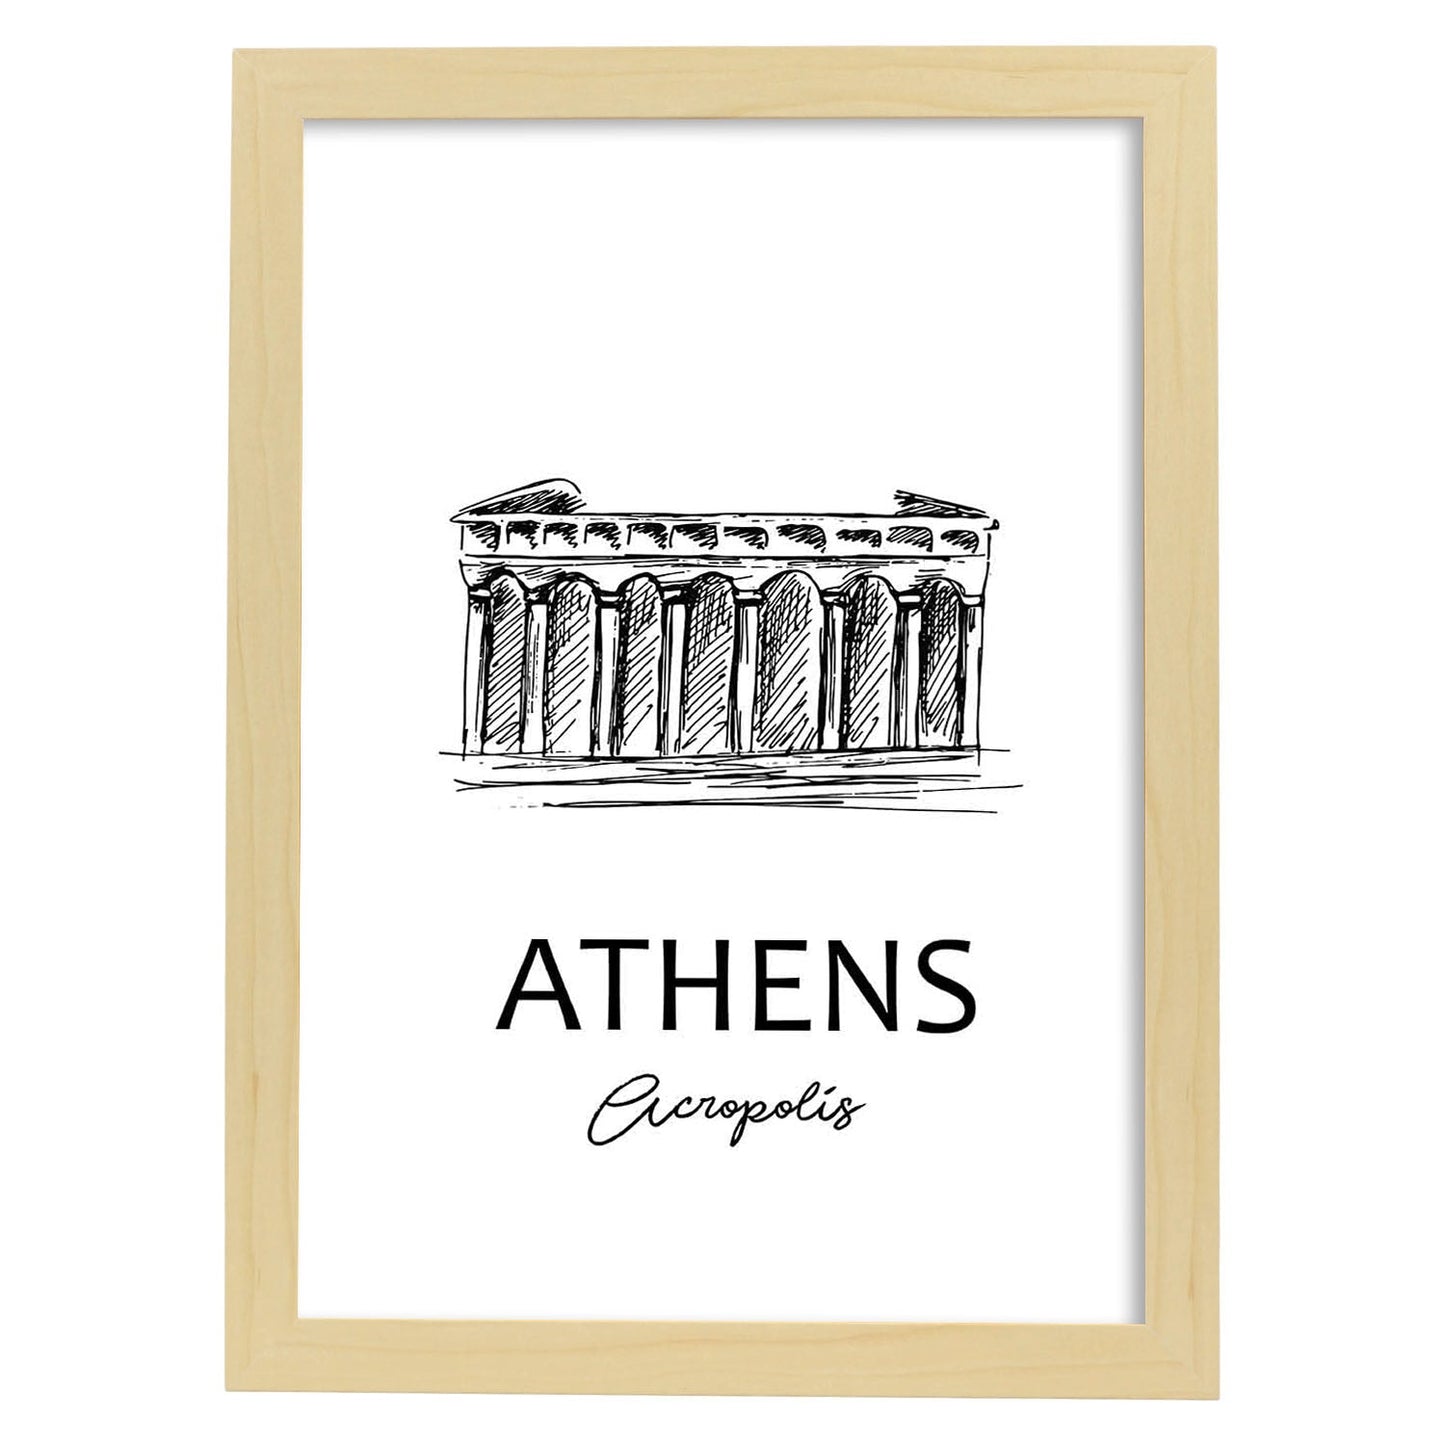 Poster de Atenas - Acropolis. Láminas con monumentos de ciudades.-Artwork-Nacnic-A4-Marco Madera clara-Nacnic Estudio SL